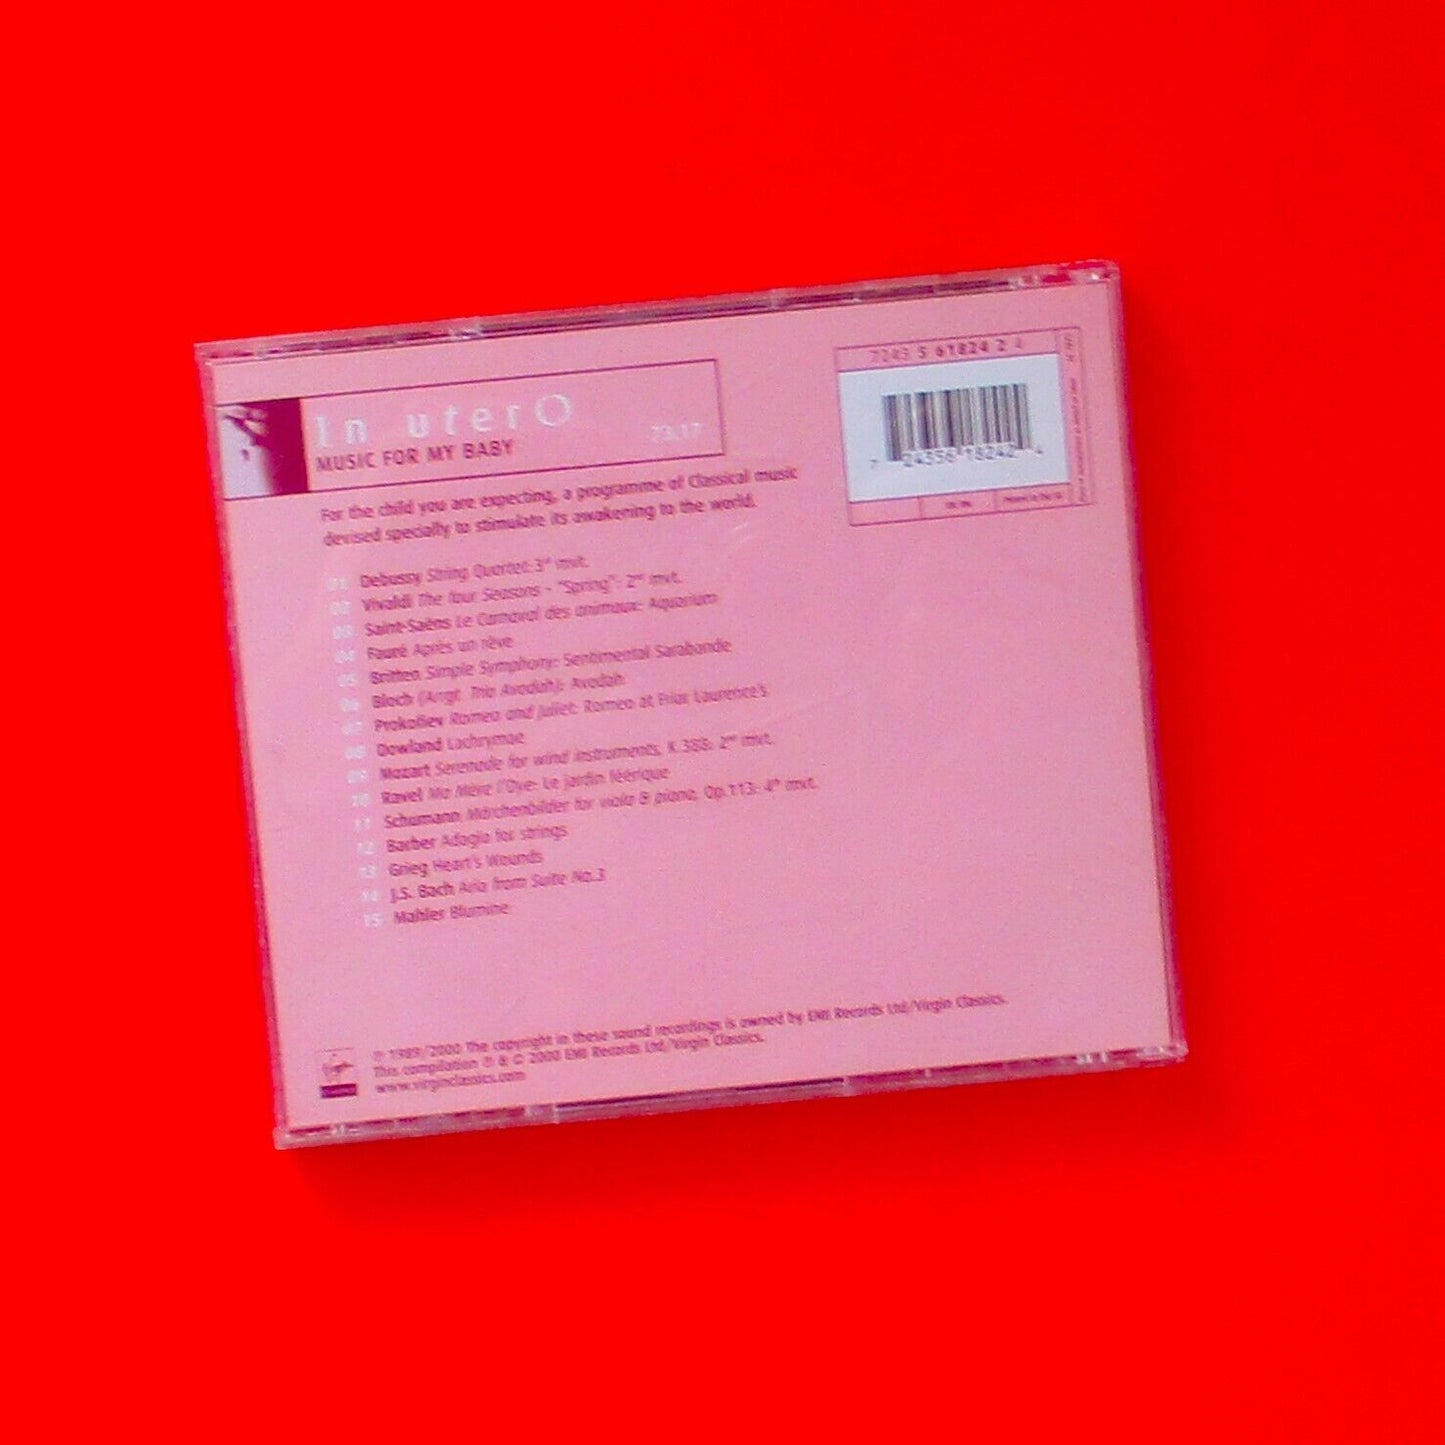 In Utero Music For My Baby 2000 Virgin Classical CD Album